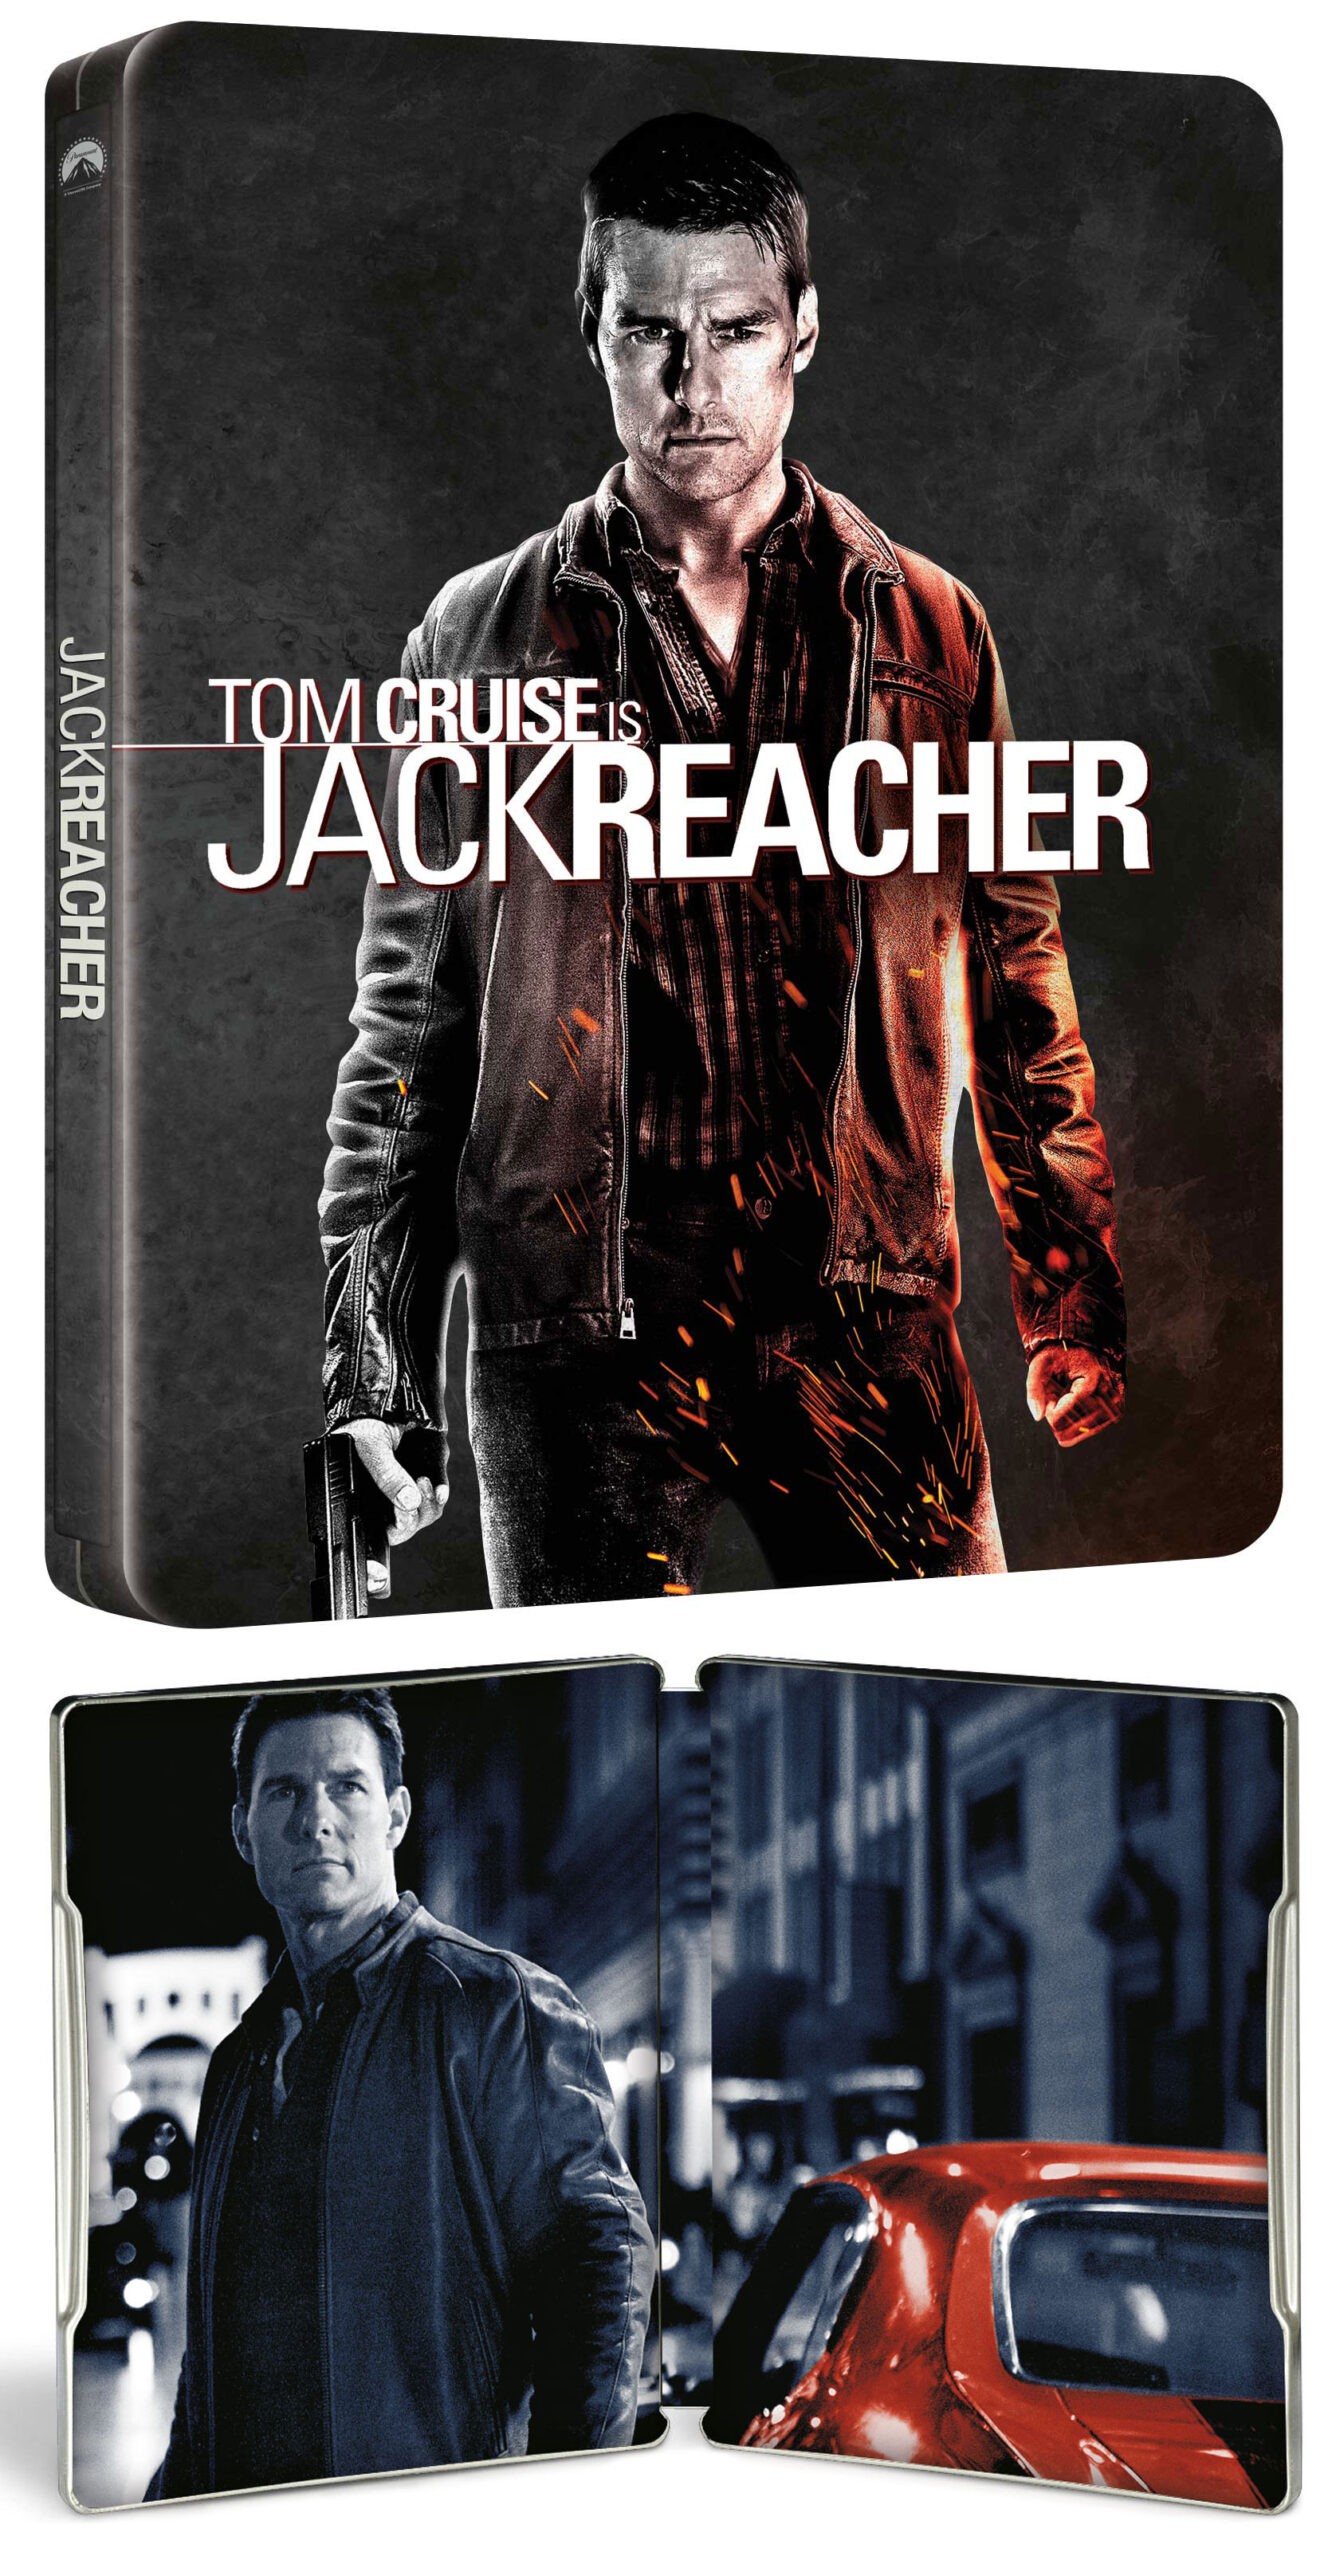 JACK REACHER - LA PROVA DECISIVA in Steelbook UHD + Blu-ray